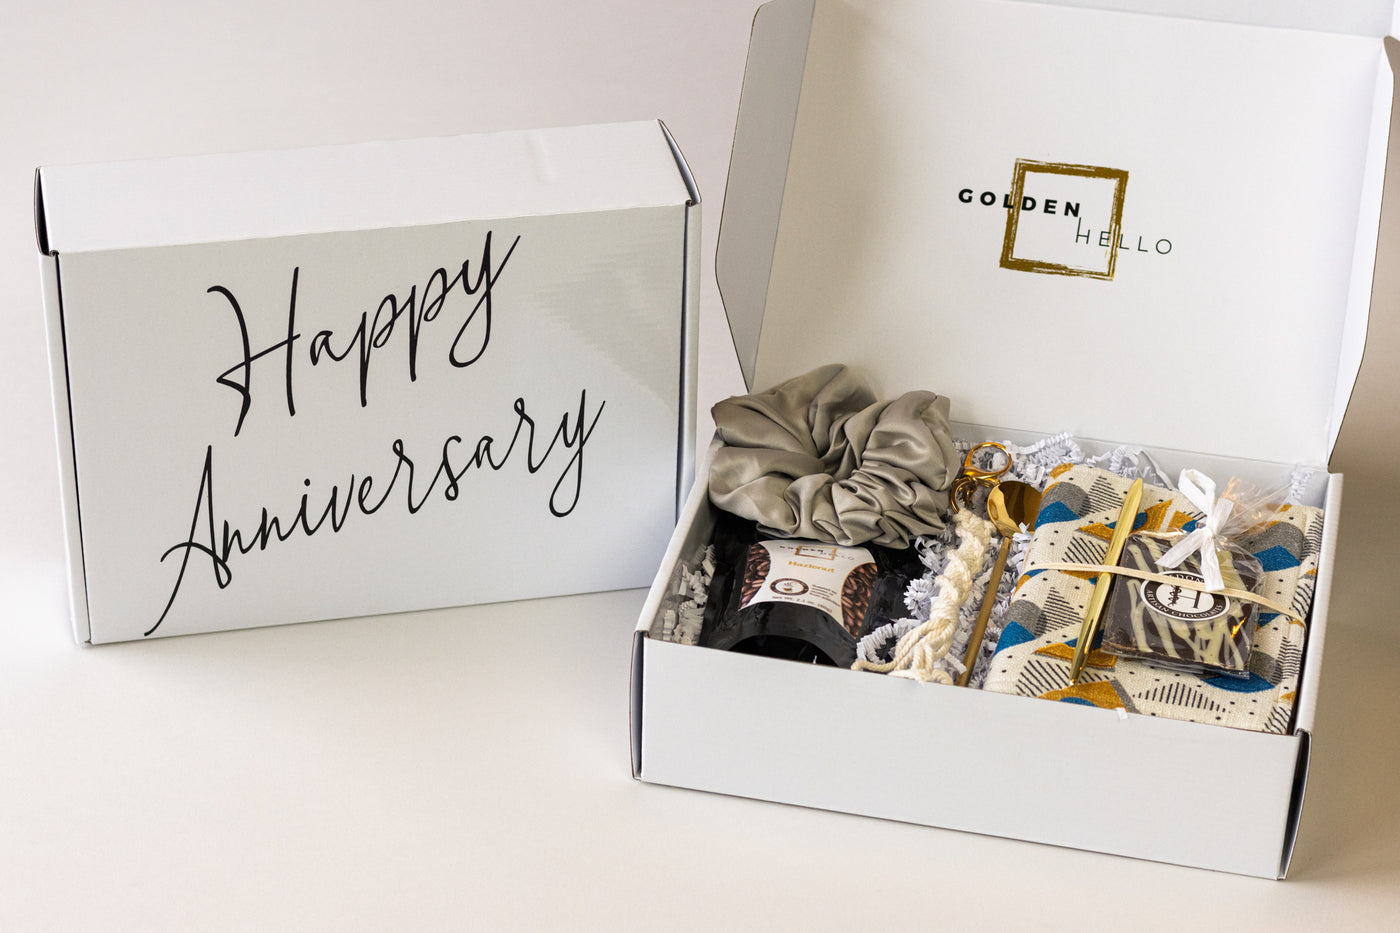 Happy Anniversary – Golden Hello Company